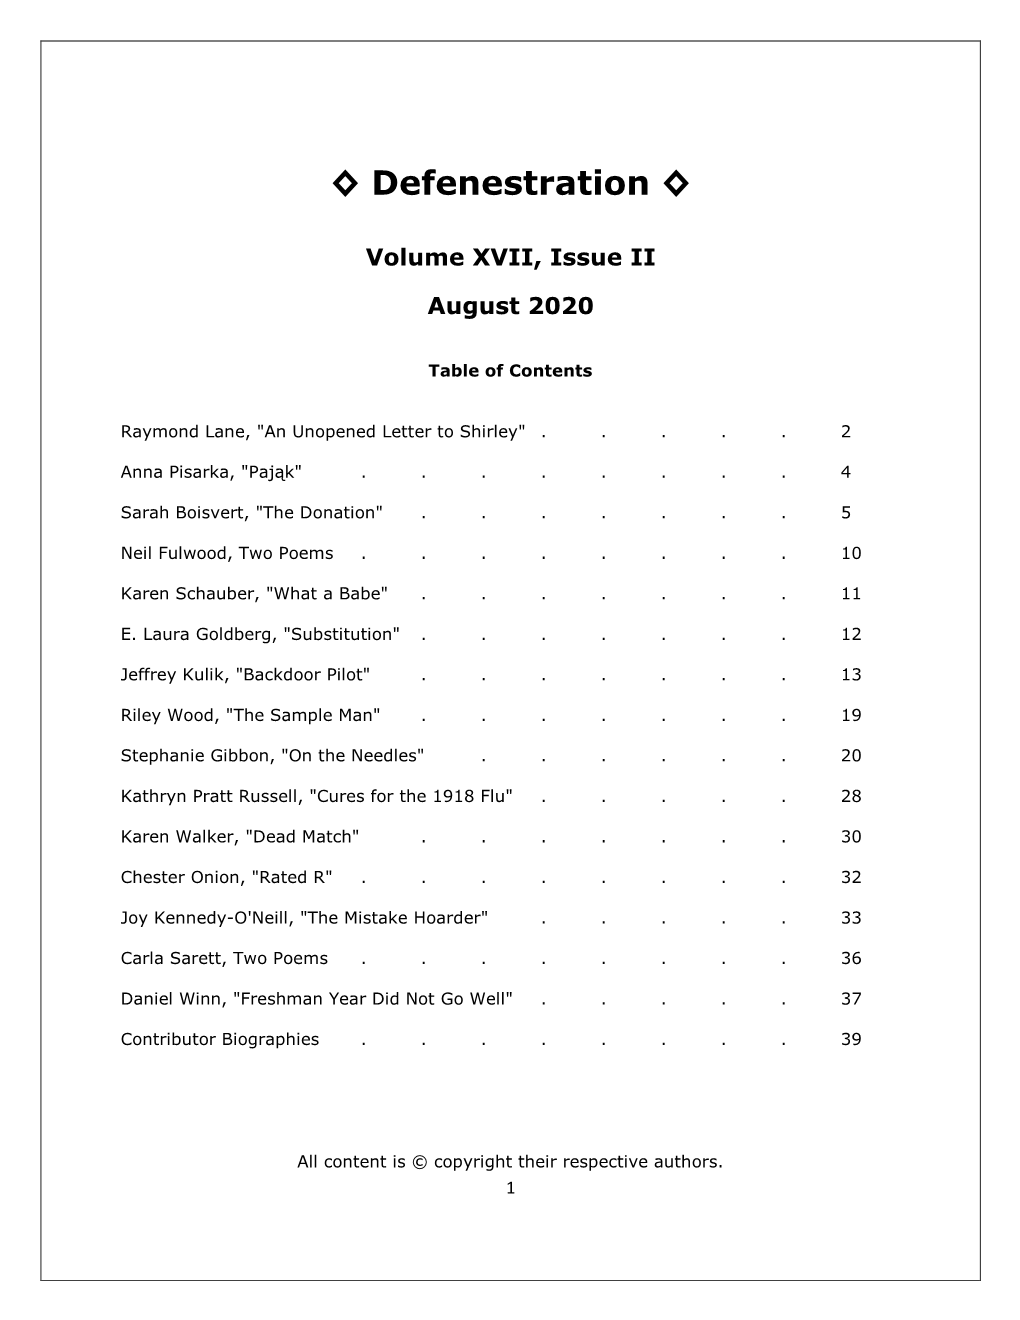 Defenestration, August 2020